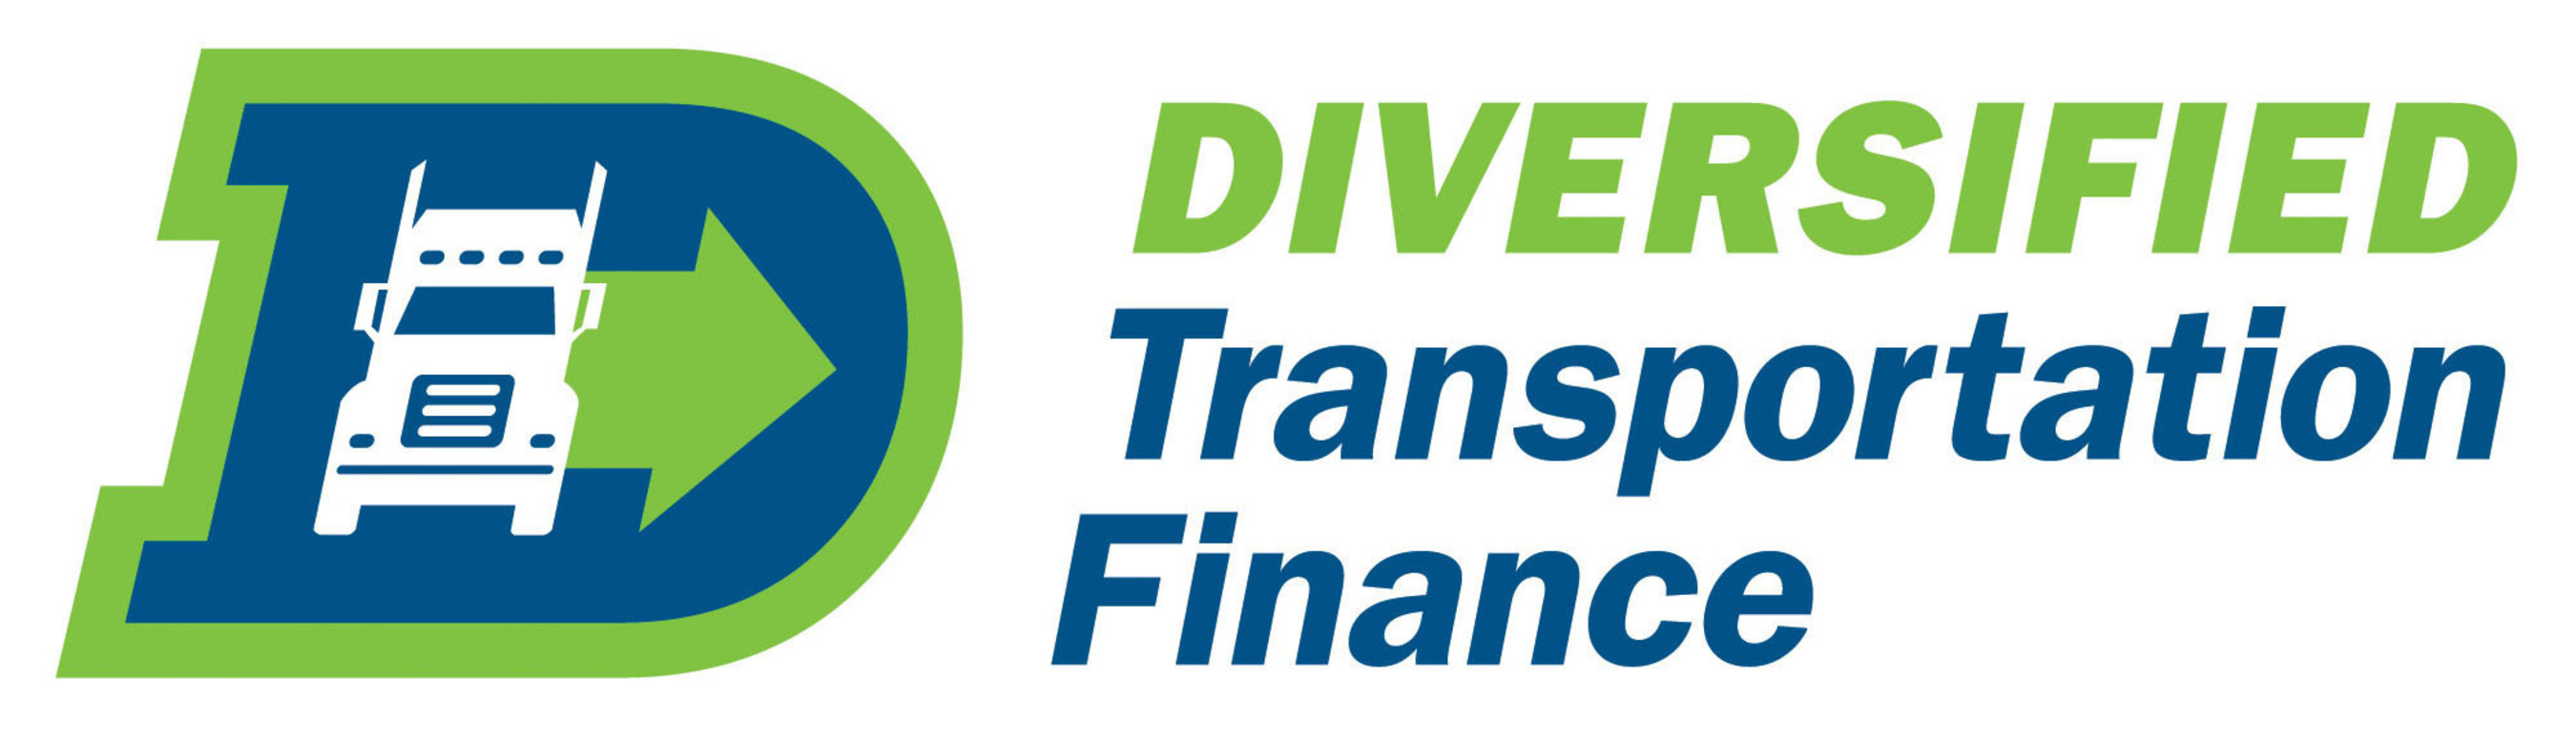 Solving Transportation Finance. (PRNewsFoto/Diversified Lenders, Inc.) (PRNewsFoto/DIVERSIFIED LENDERS, INC.)